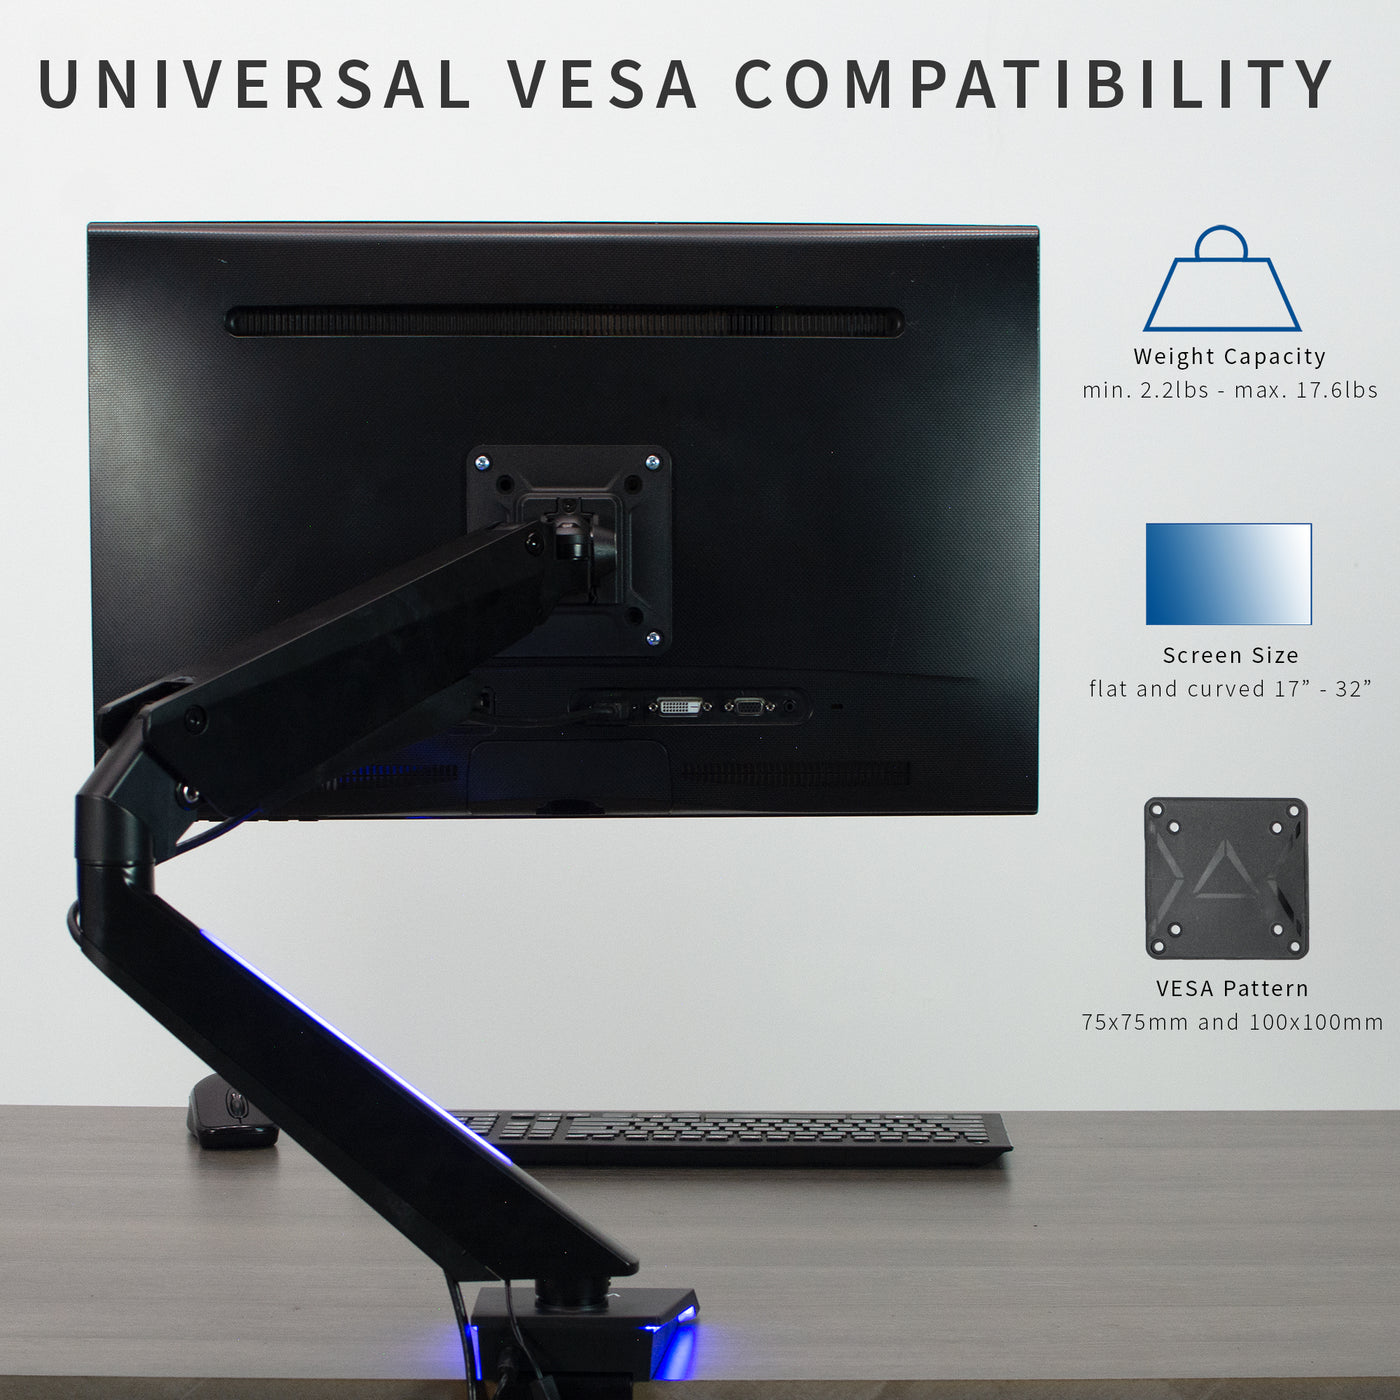 Single Gaming Pneumatic Monitor Arm - Universal VESA Compatibility